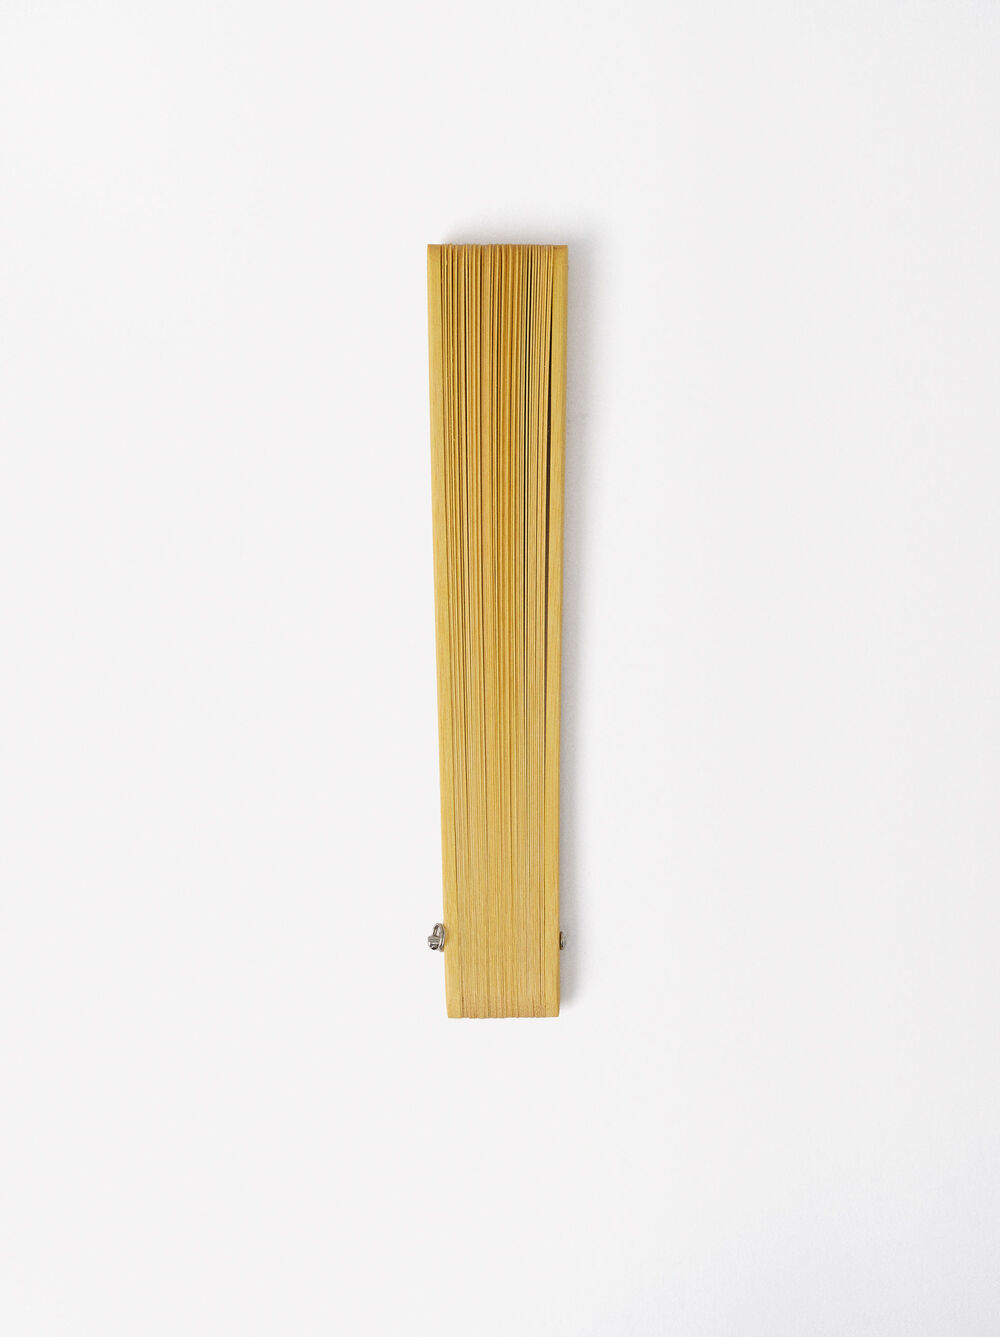 Ventaglio Bambù Motivo Traforato